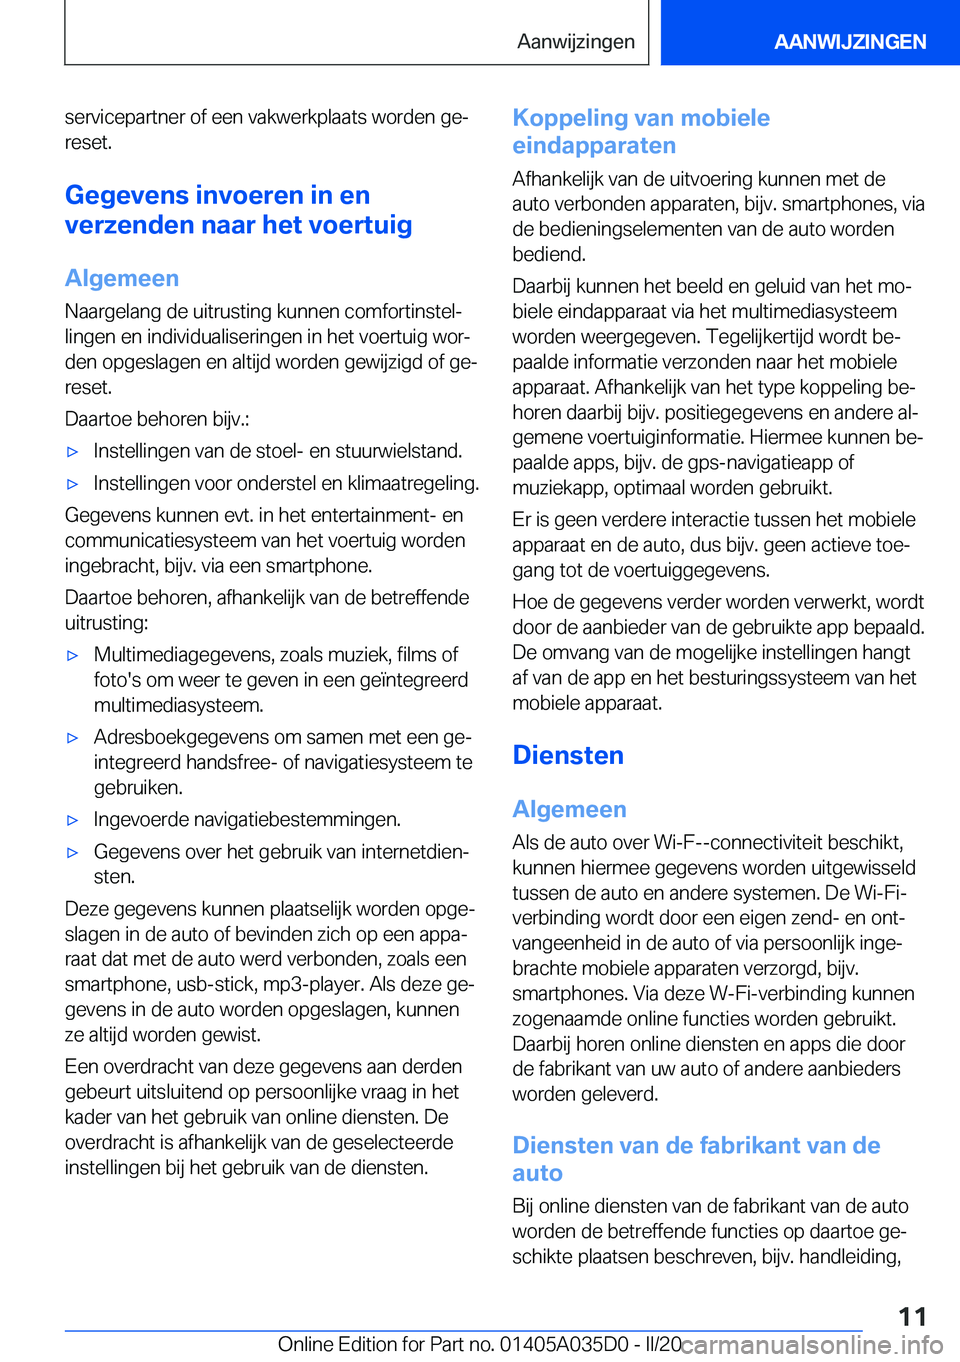 BMW X4 2020  Instructieboekjes (in Dutch) �s�e�r�v�i�c�e�p�a�r�t�n�e�r��o�f��e�e�n��v�a�k�w�e�r�k�p�l�a�a�t�s��w�o�r�d�e�n��g�ej
�r�e�s�e�t�.
�G�e�g�e�v�e�n�s��i�n�v�o�e�r�e�n��i�n��e�n
�v�e�r�z�e�n�d�e�n��n�a�a�r��h�e�t��v�o�e�r�